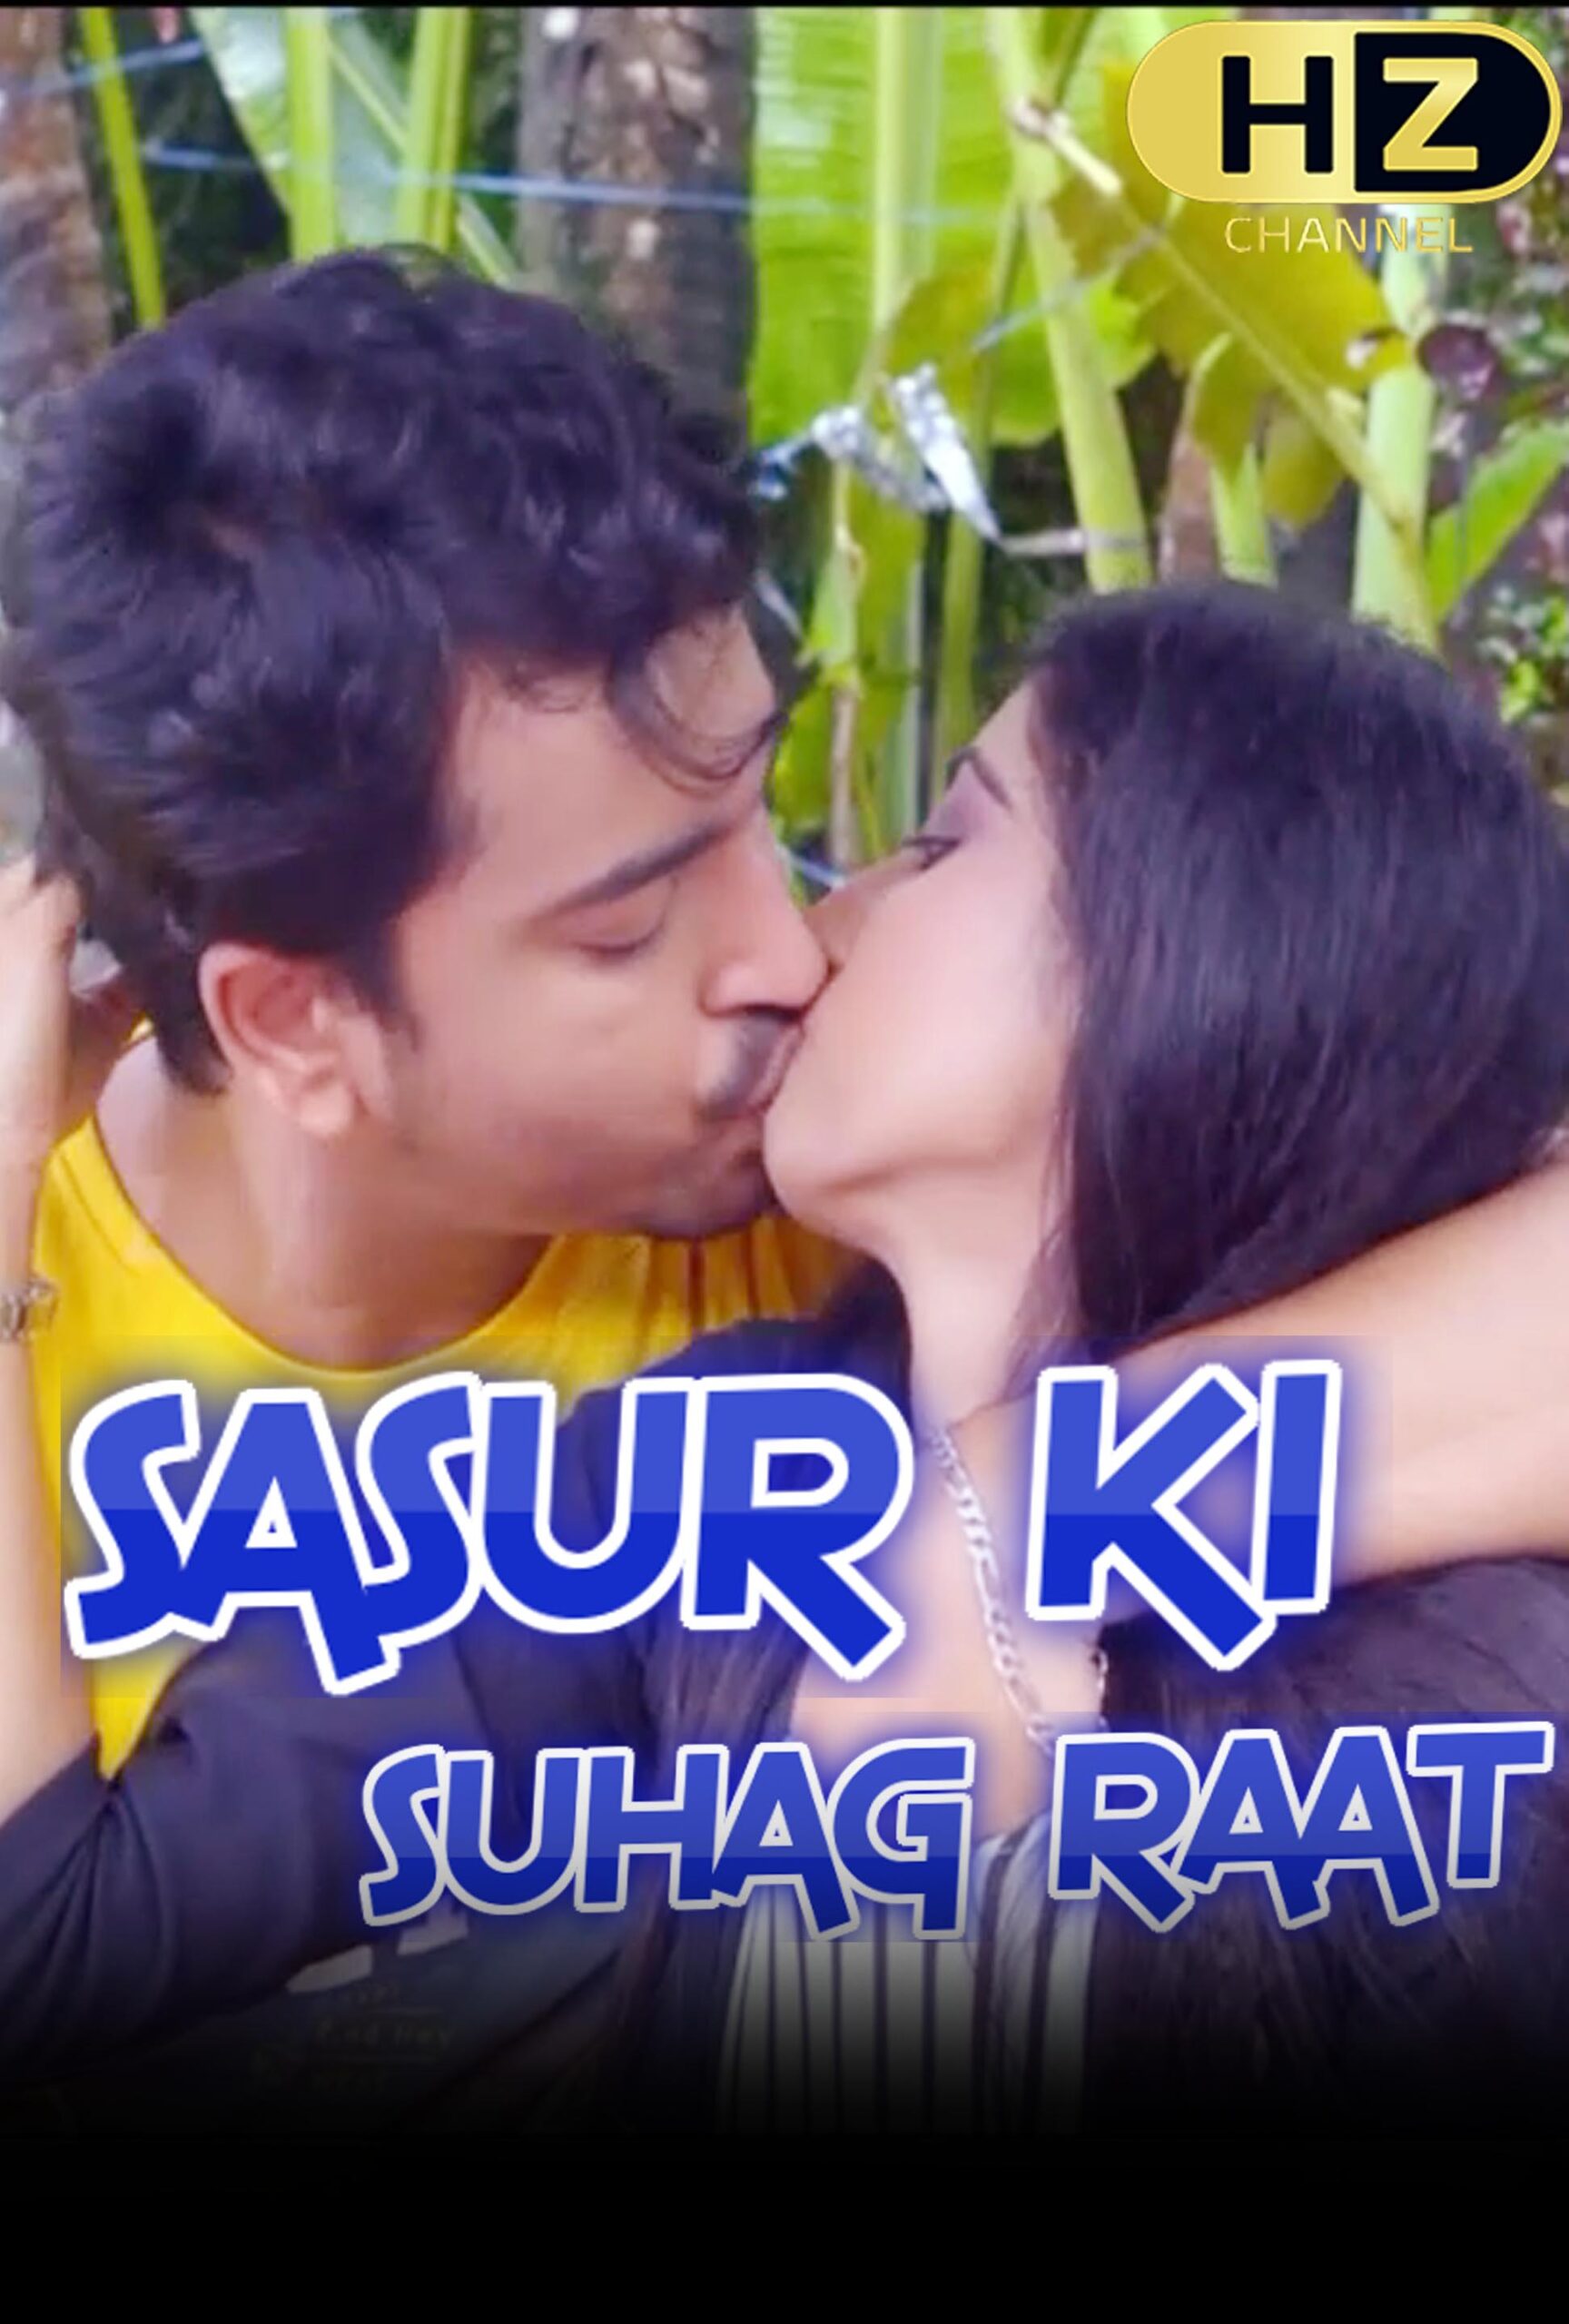 You are currently viewing Sasur Ki Suhagrat 2020 Hindi S01E03 Hot Web Series 720p HDRip 200MB Download & Watch Online